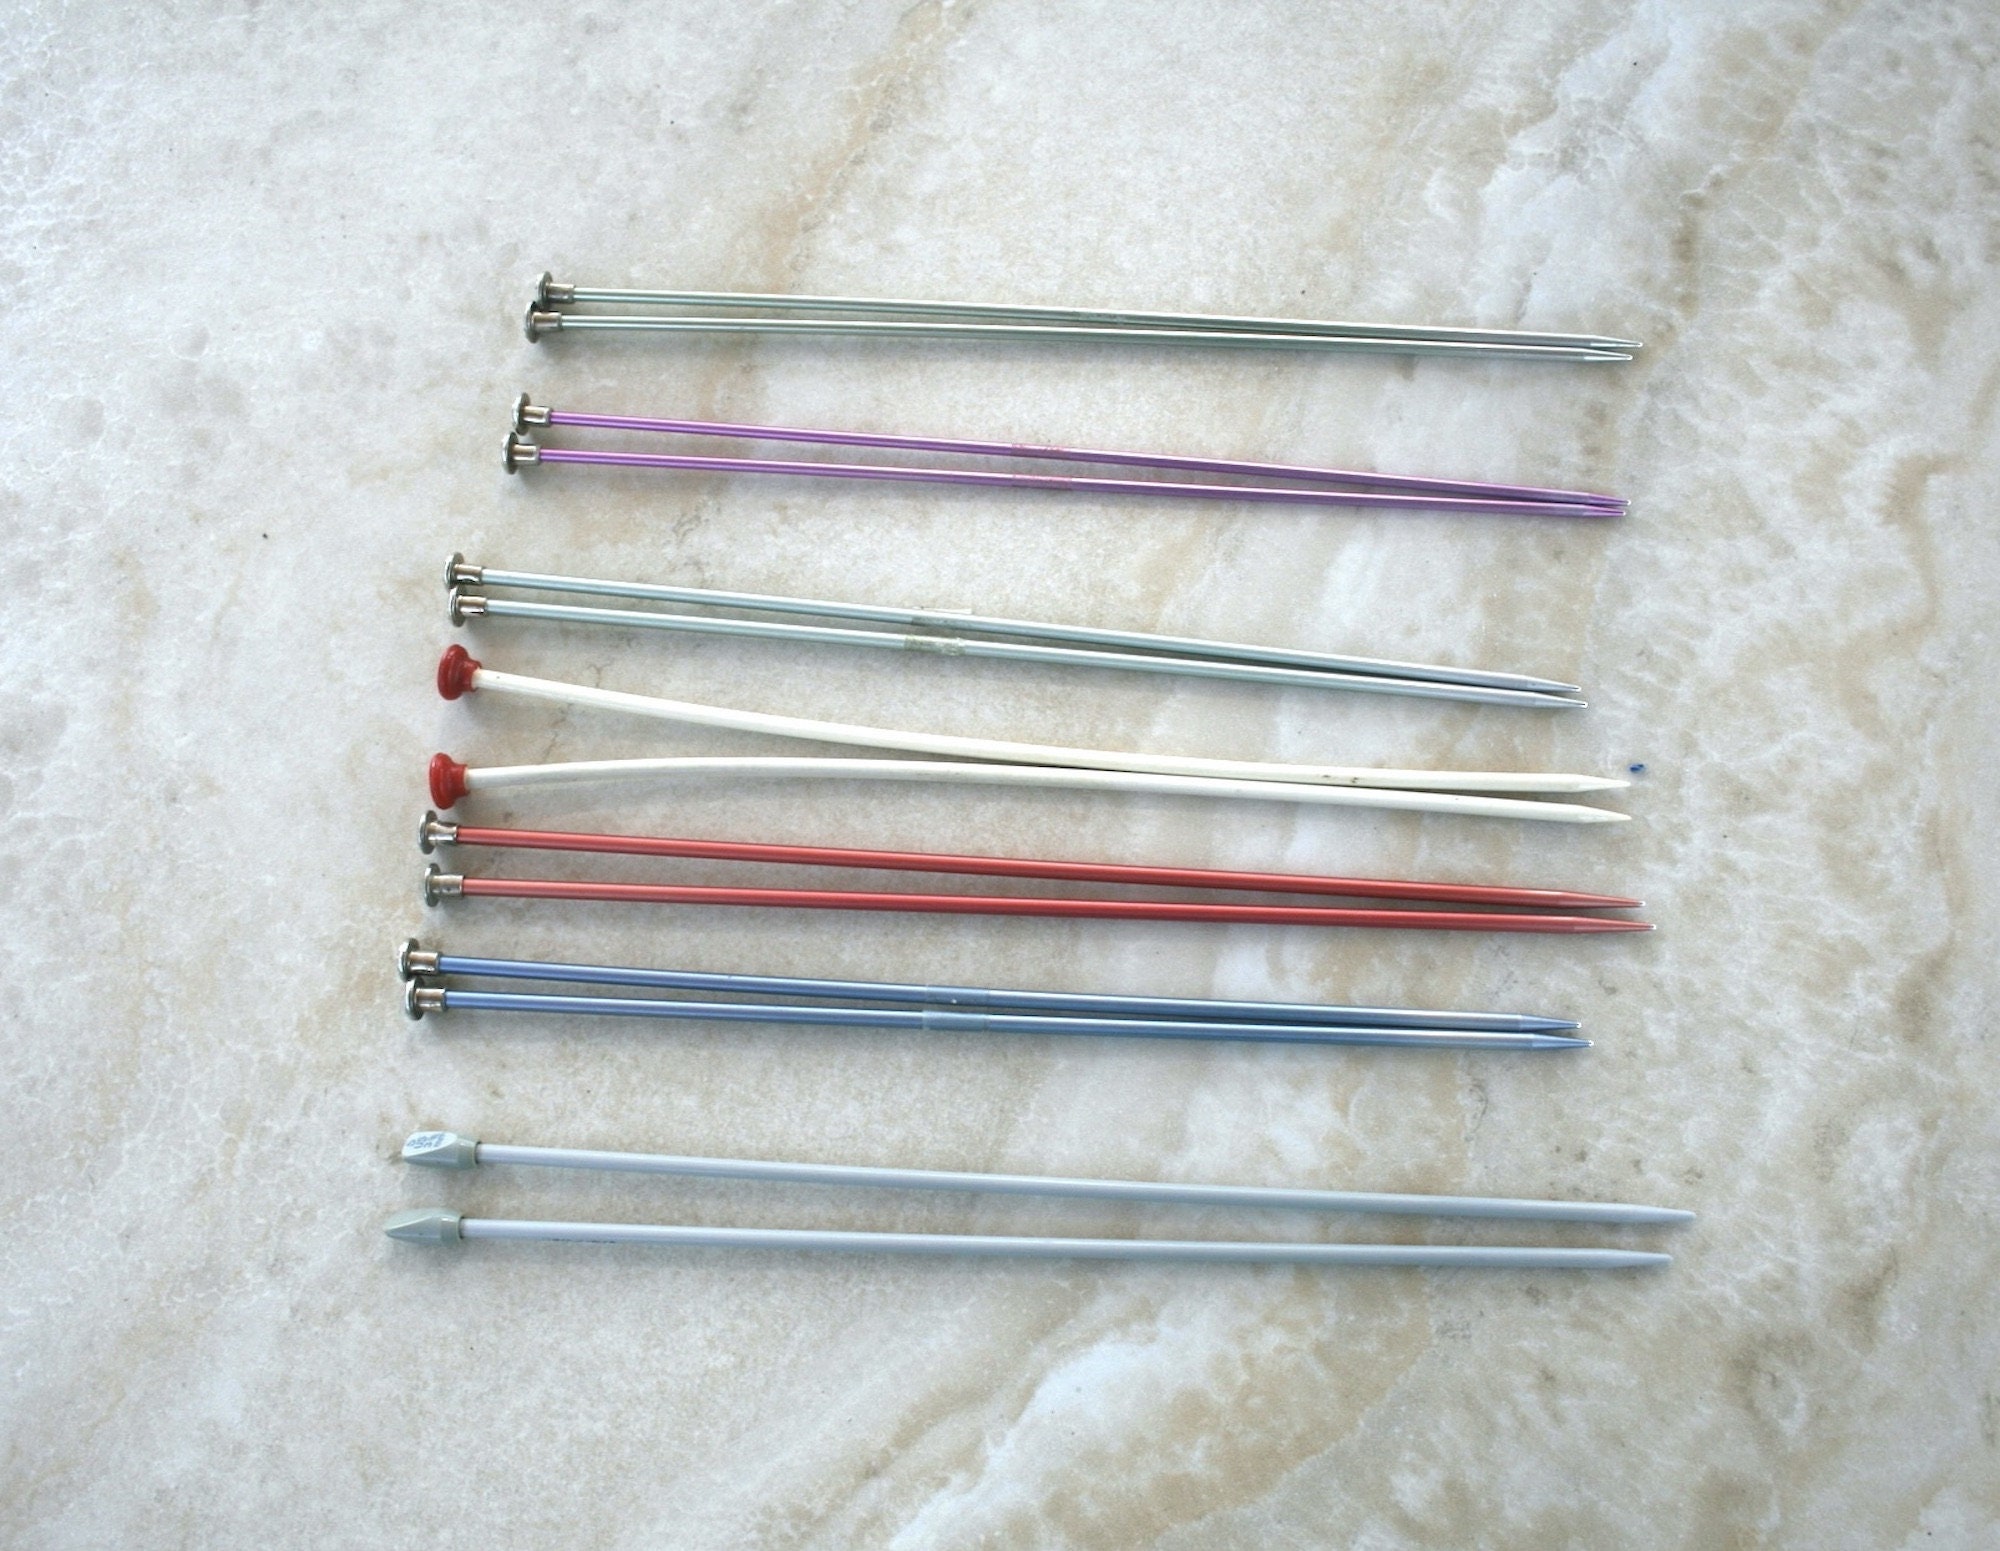 Vintage Knitting Needles, Boye, Susan Bates, Metal, Plastic, Various Sizes  and Colors Knitting Needles 